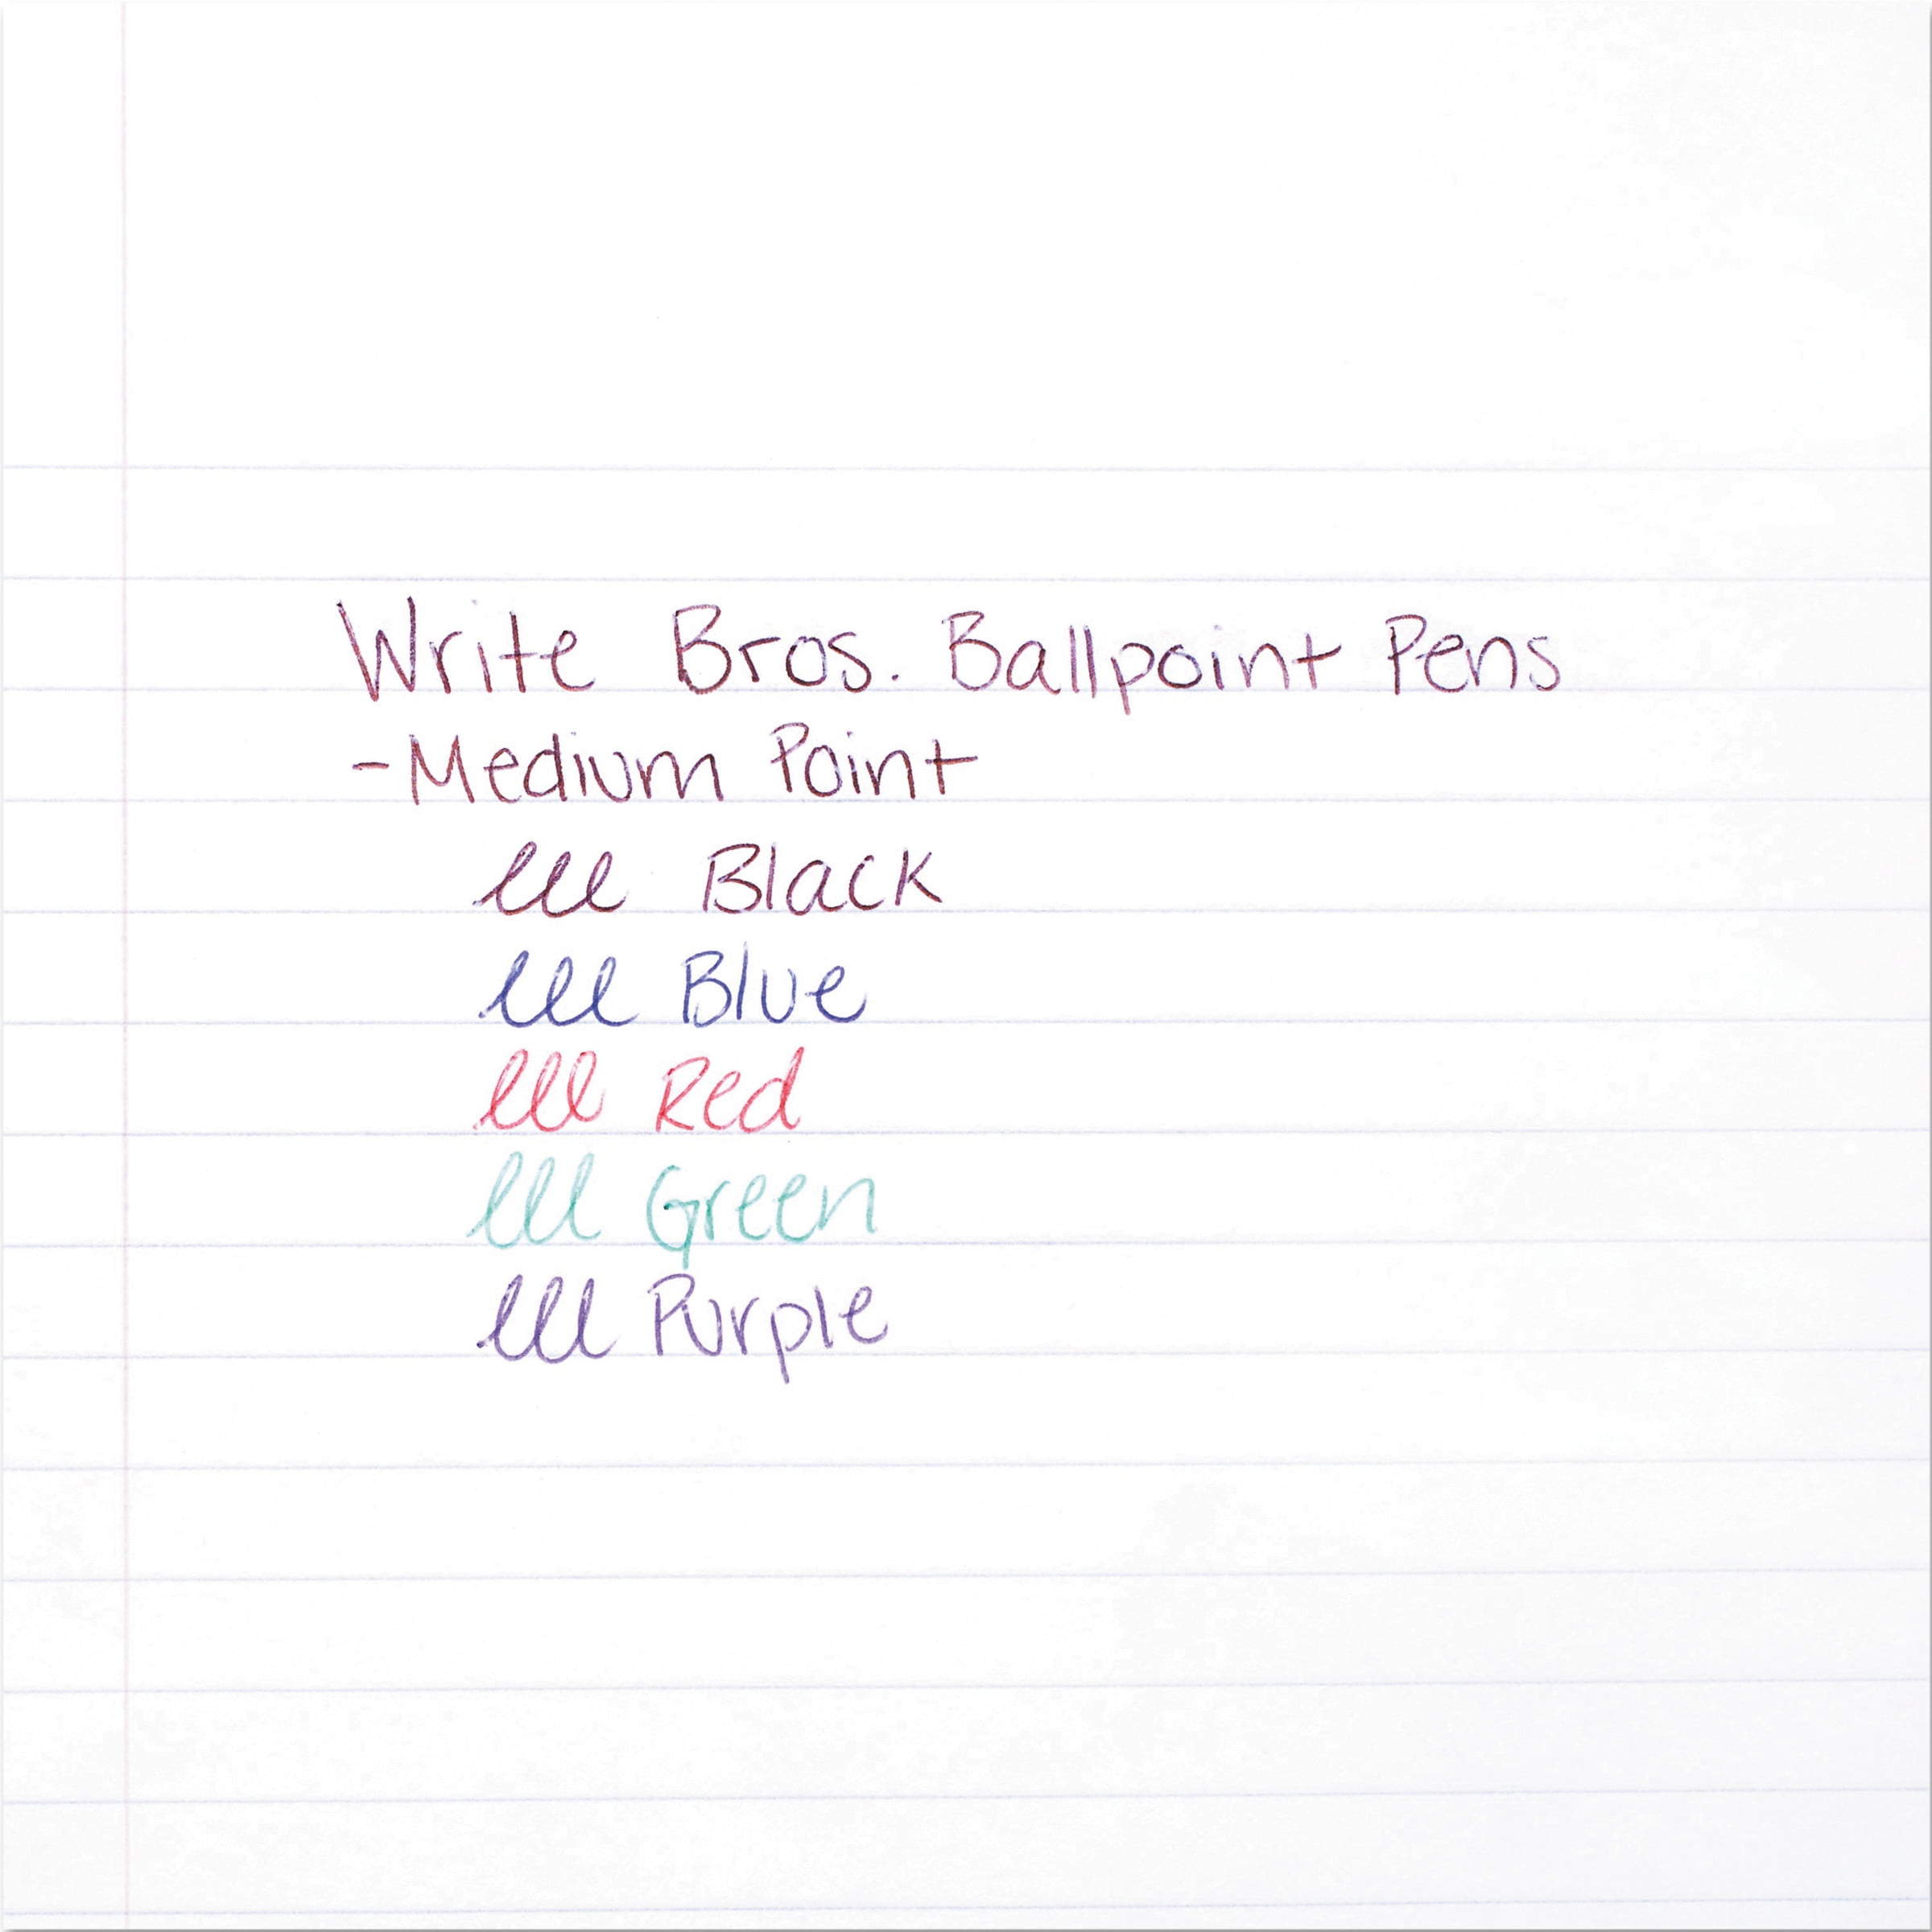 Paper Mate Write Bros 1.0 3331131C Black Ballpoint Pens, Medium Point, 2  Dozen